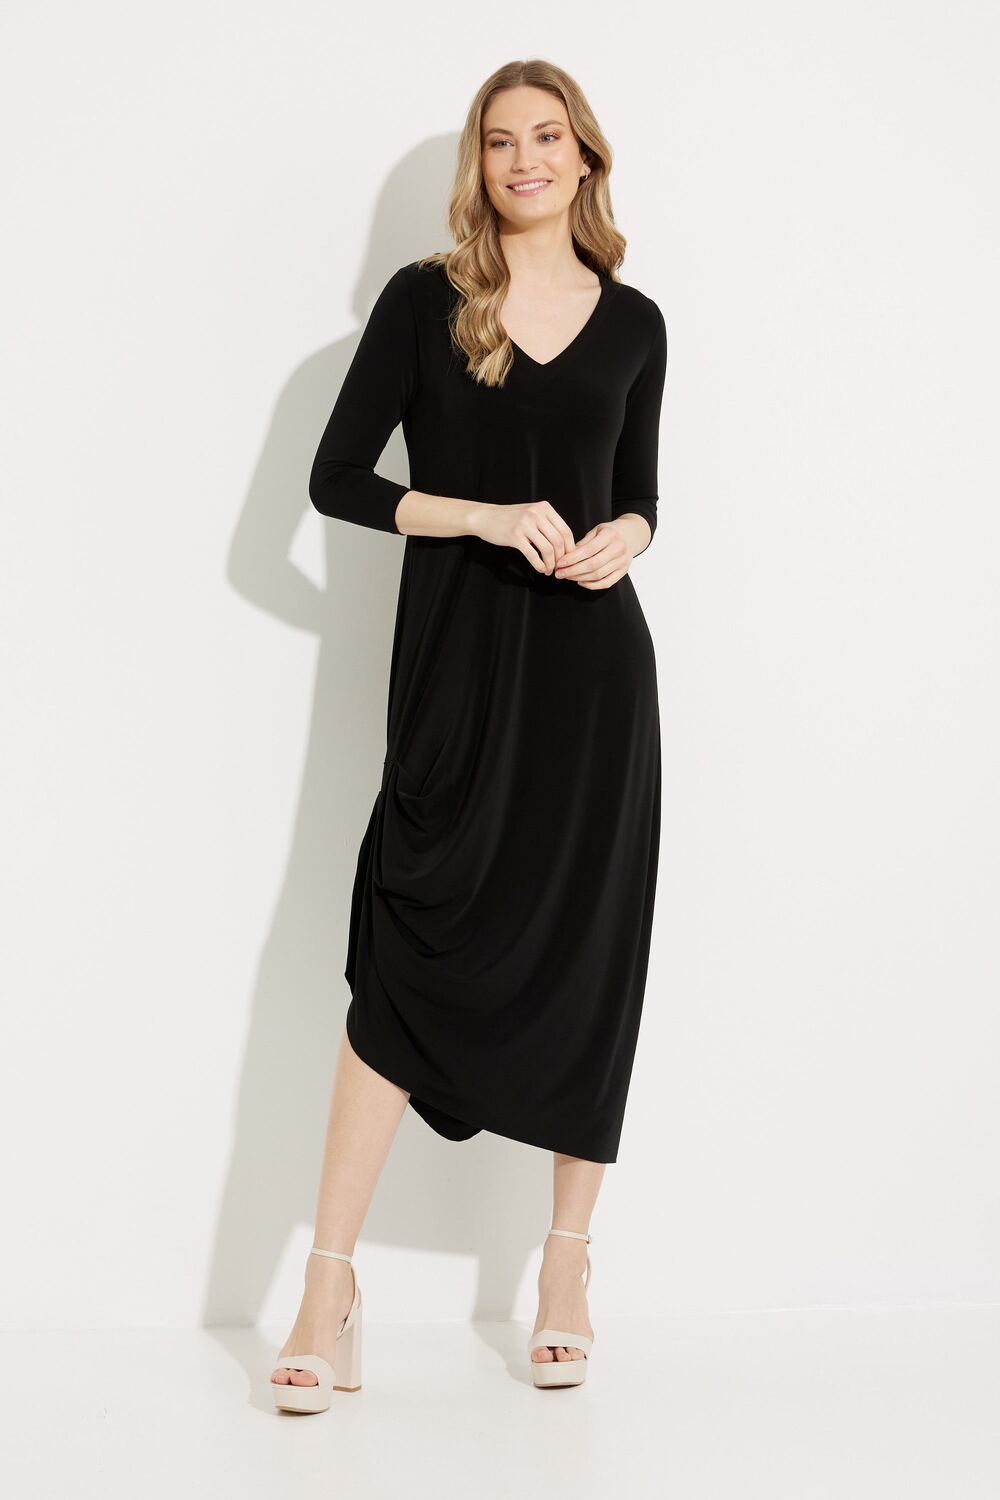 V-Neck 3/4 Sleeve Dress Style 2864-2 . Black